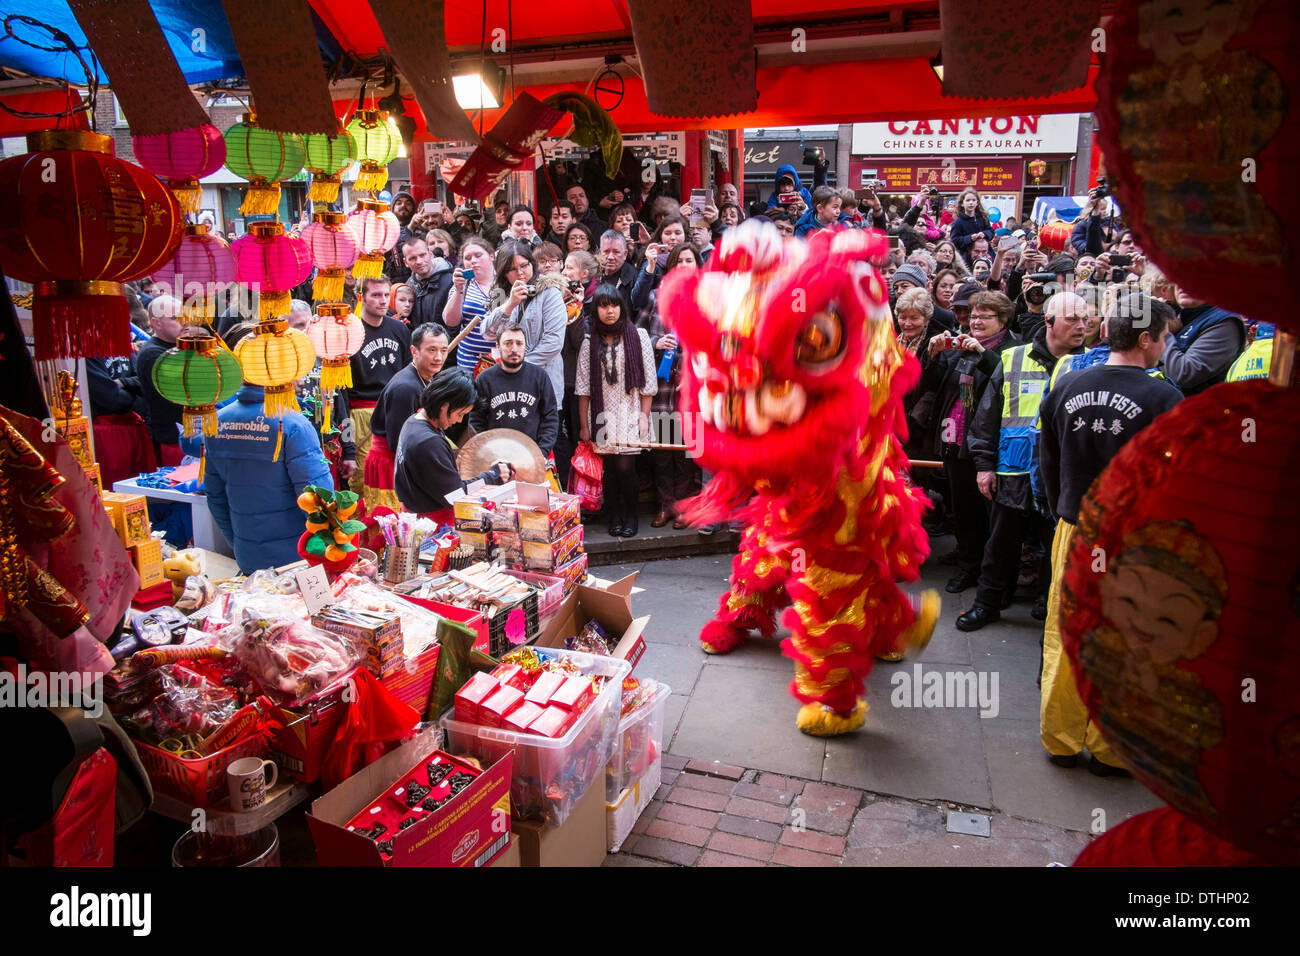 Dragon dance, West End, Chinese New Year celebrations, London, United Kingdom Stock Photo